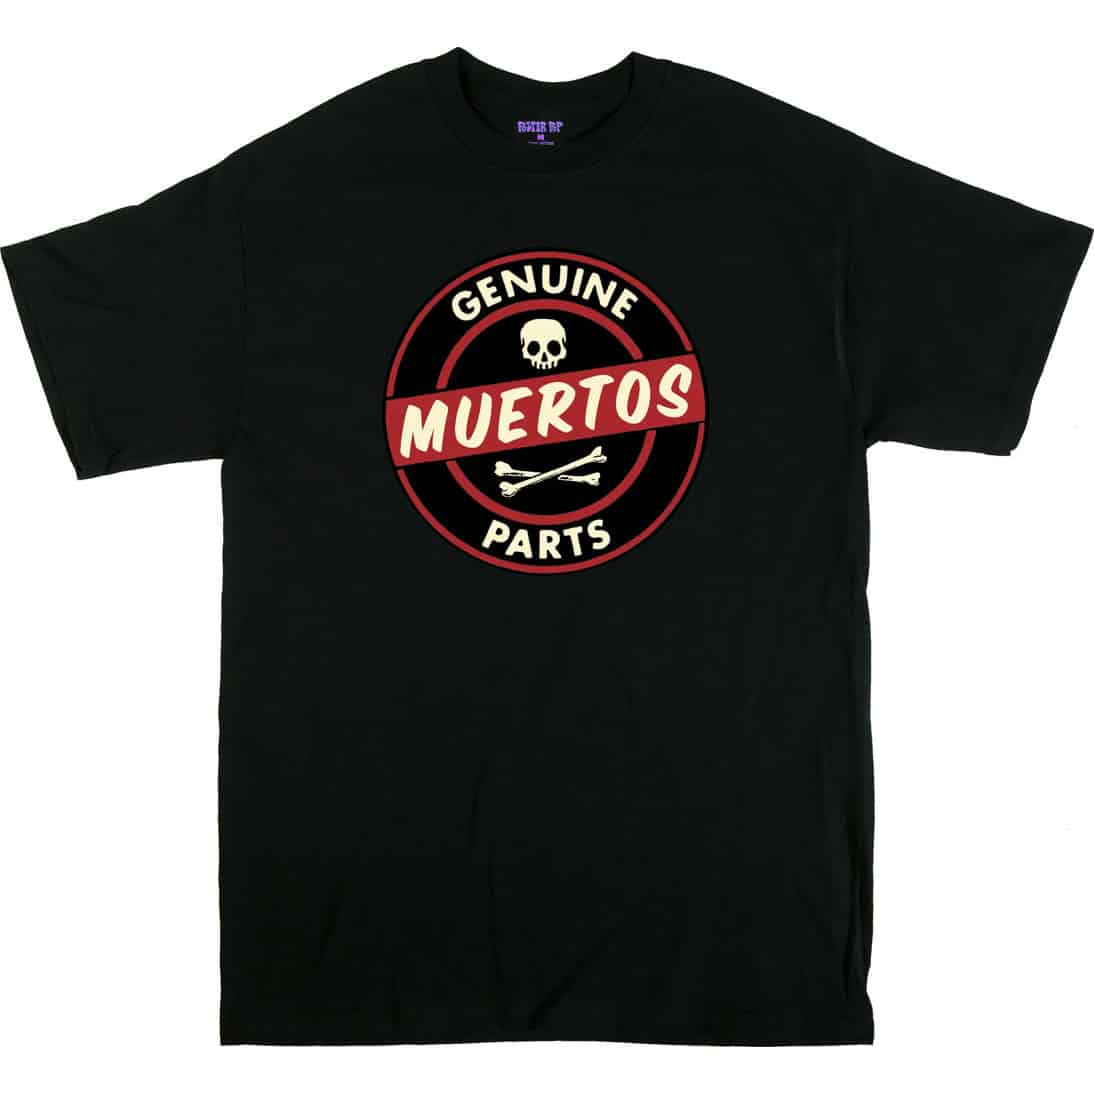 Kruse Genuine Muertos Parts T-Shirt